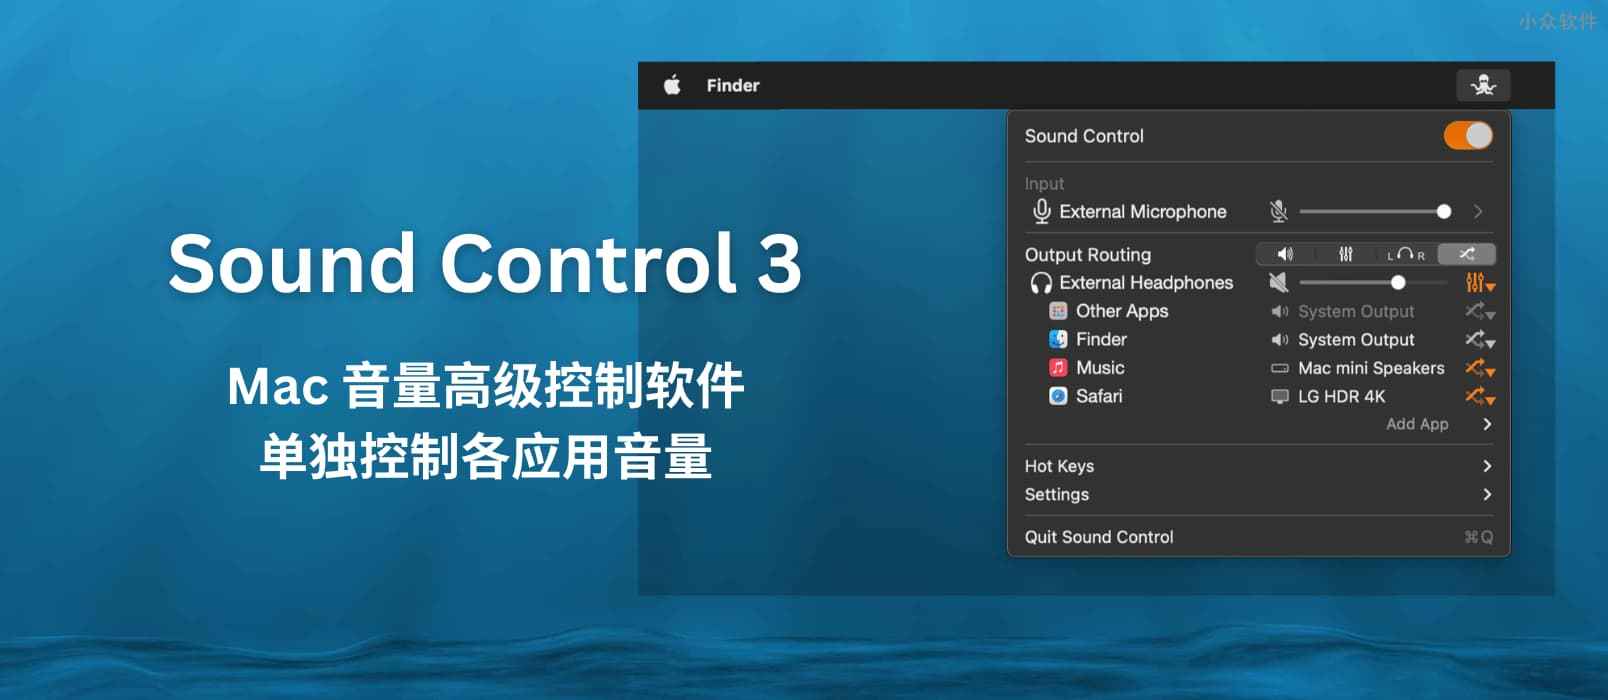 Sound Control 3 - Mac 音量高级控制：单独控制各应用音量